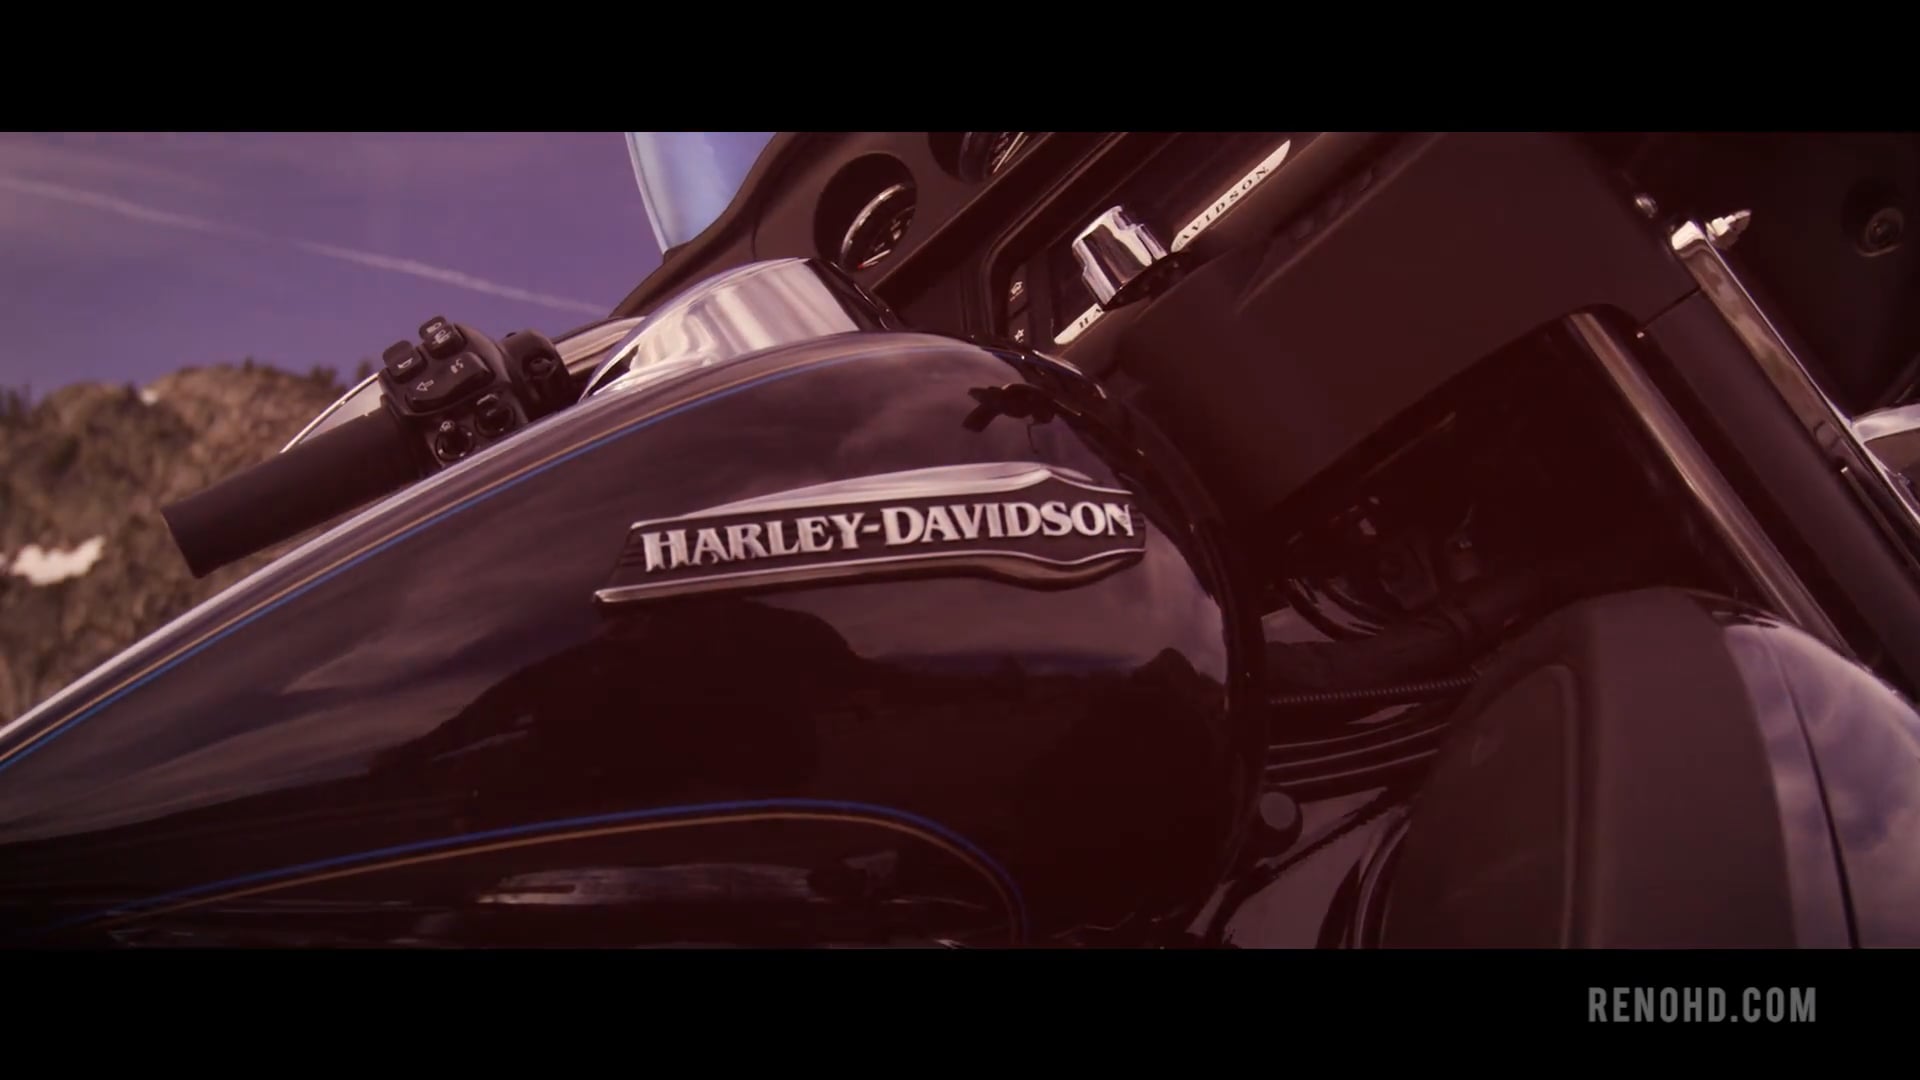 Chester's Harley Davidson